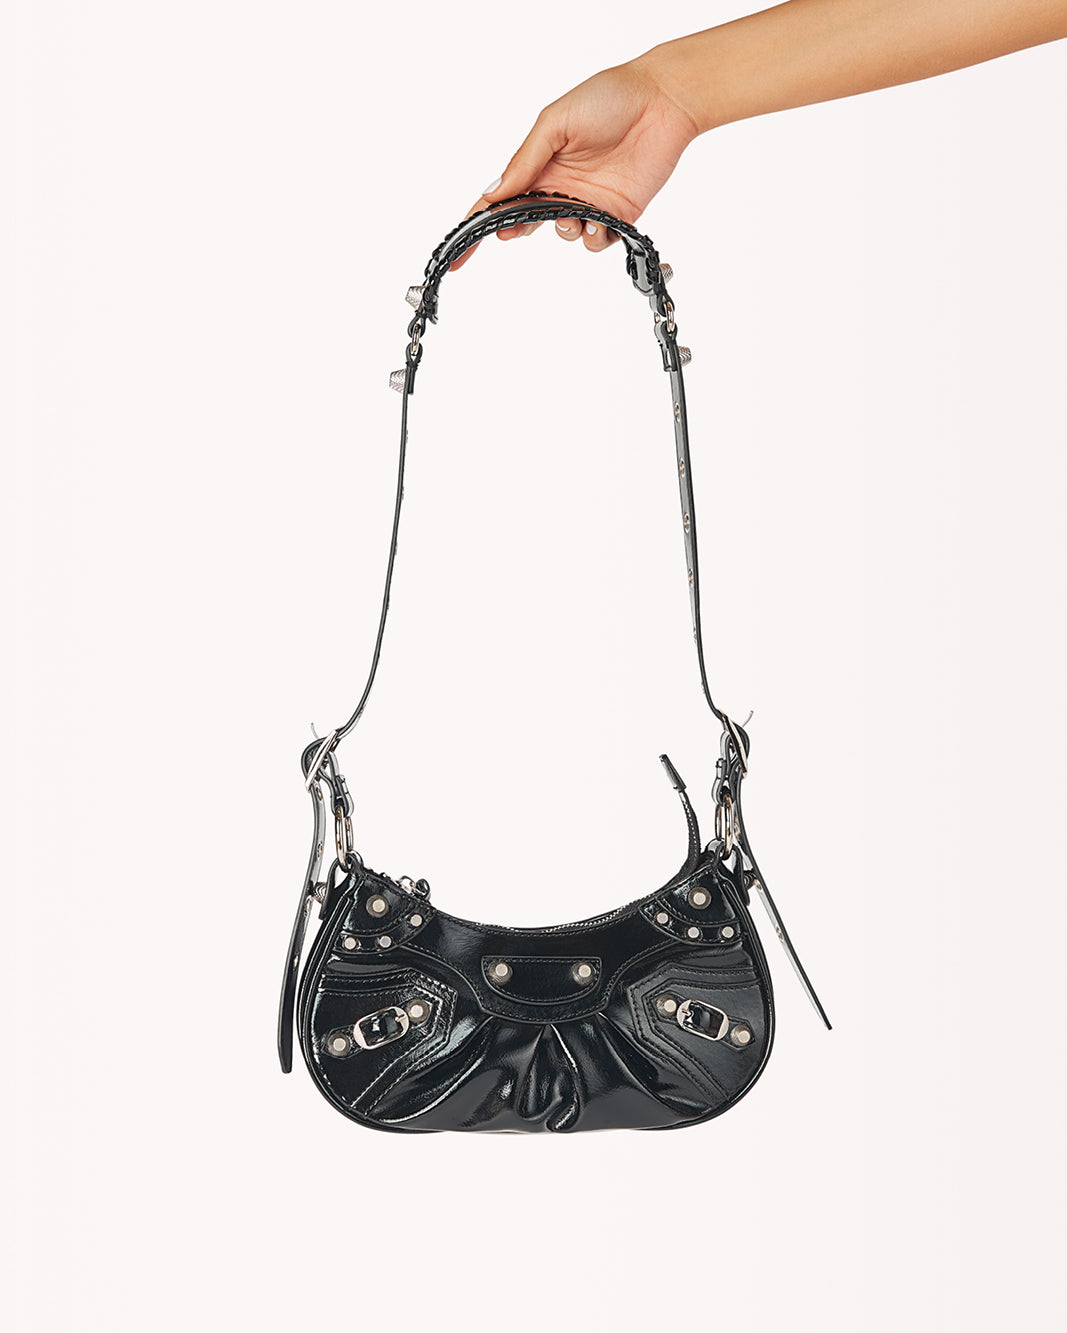 ELLY SHOULDER BAG - BLACK CRINKLE PATENT-Handbags-Billini--Billini